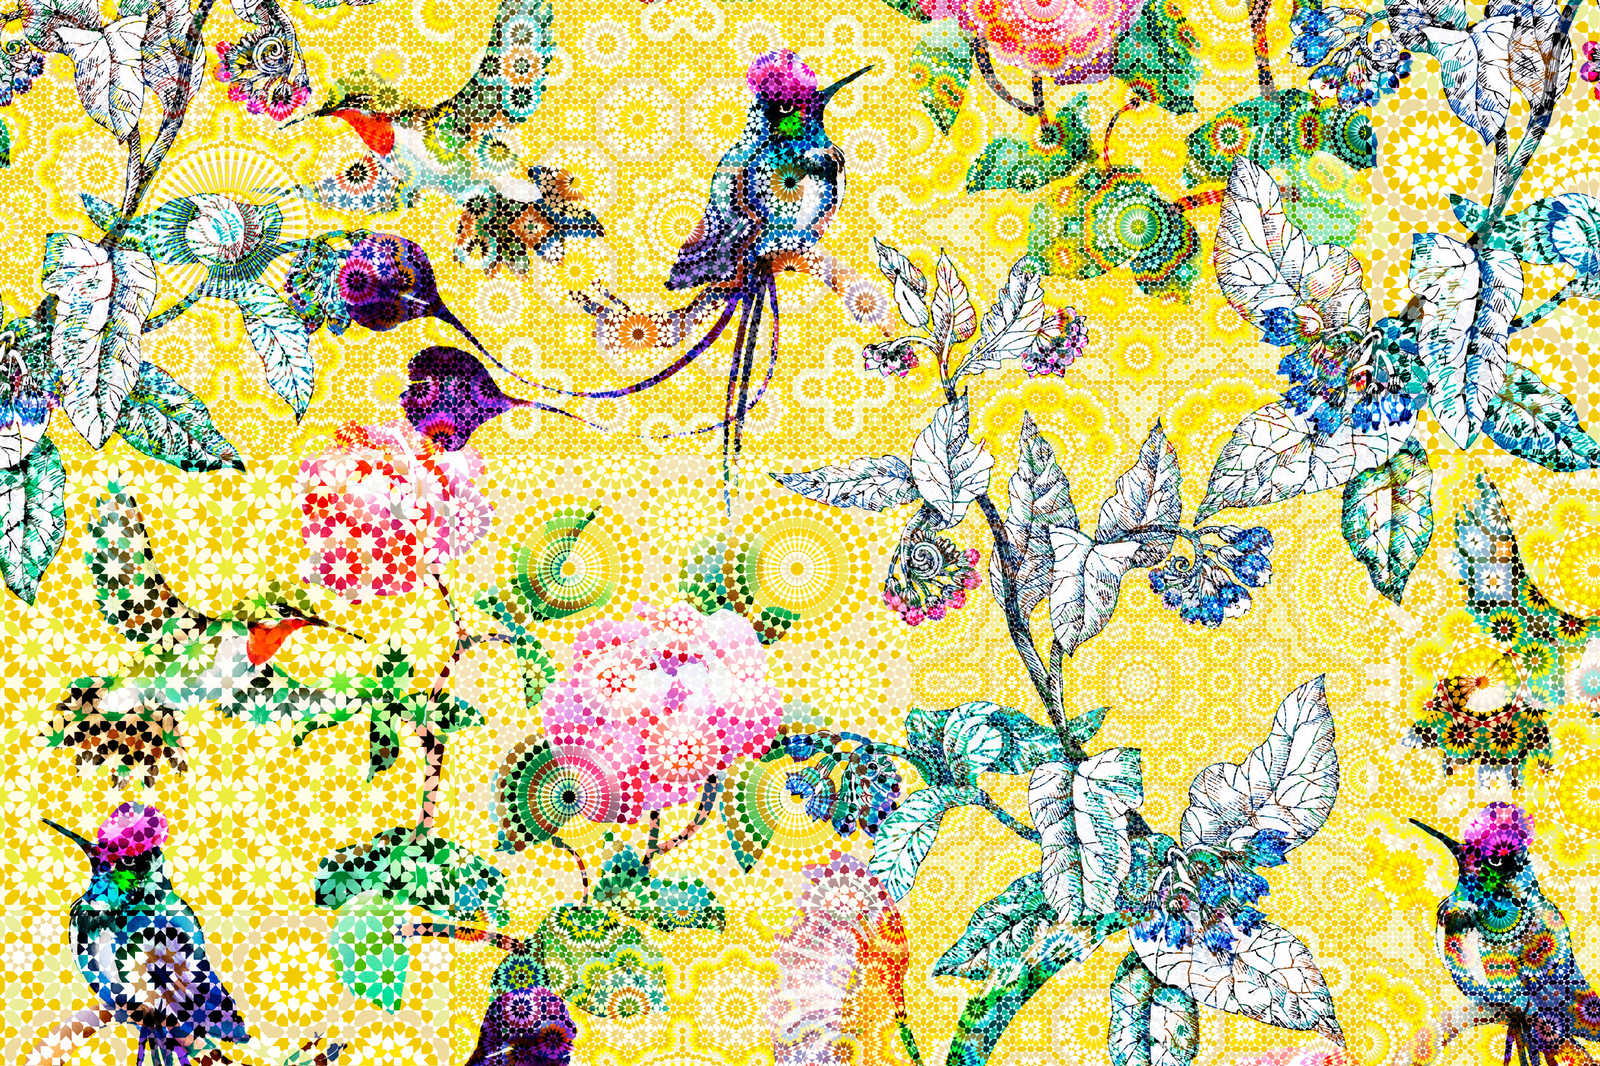             Leinwandbild exotisches Blumen Mosaik – 0,90 m x 0,60 m
        